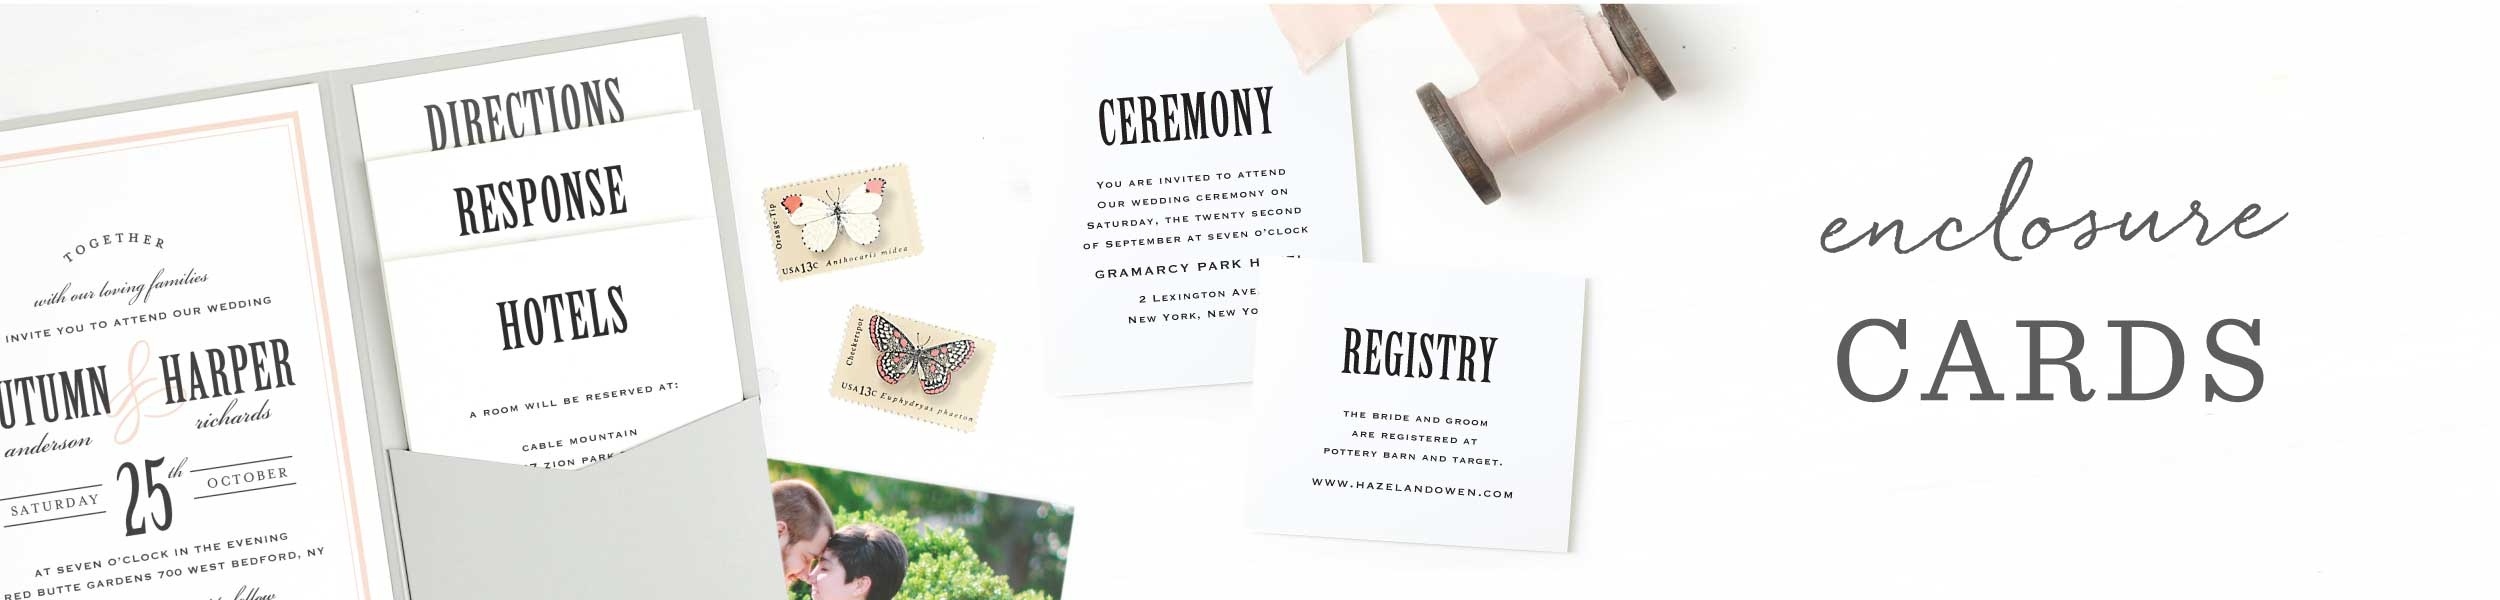 Customizable Wedding Registry Cards -Basic Invite - Free Printable Registry Cards